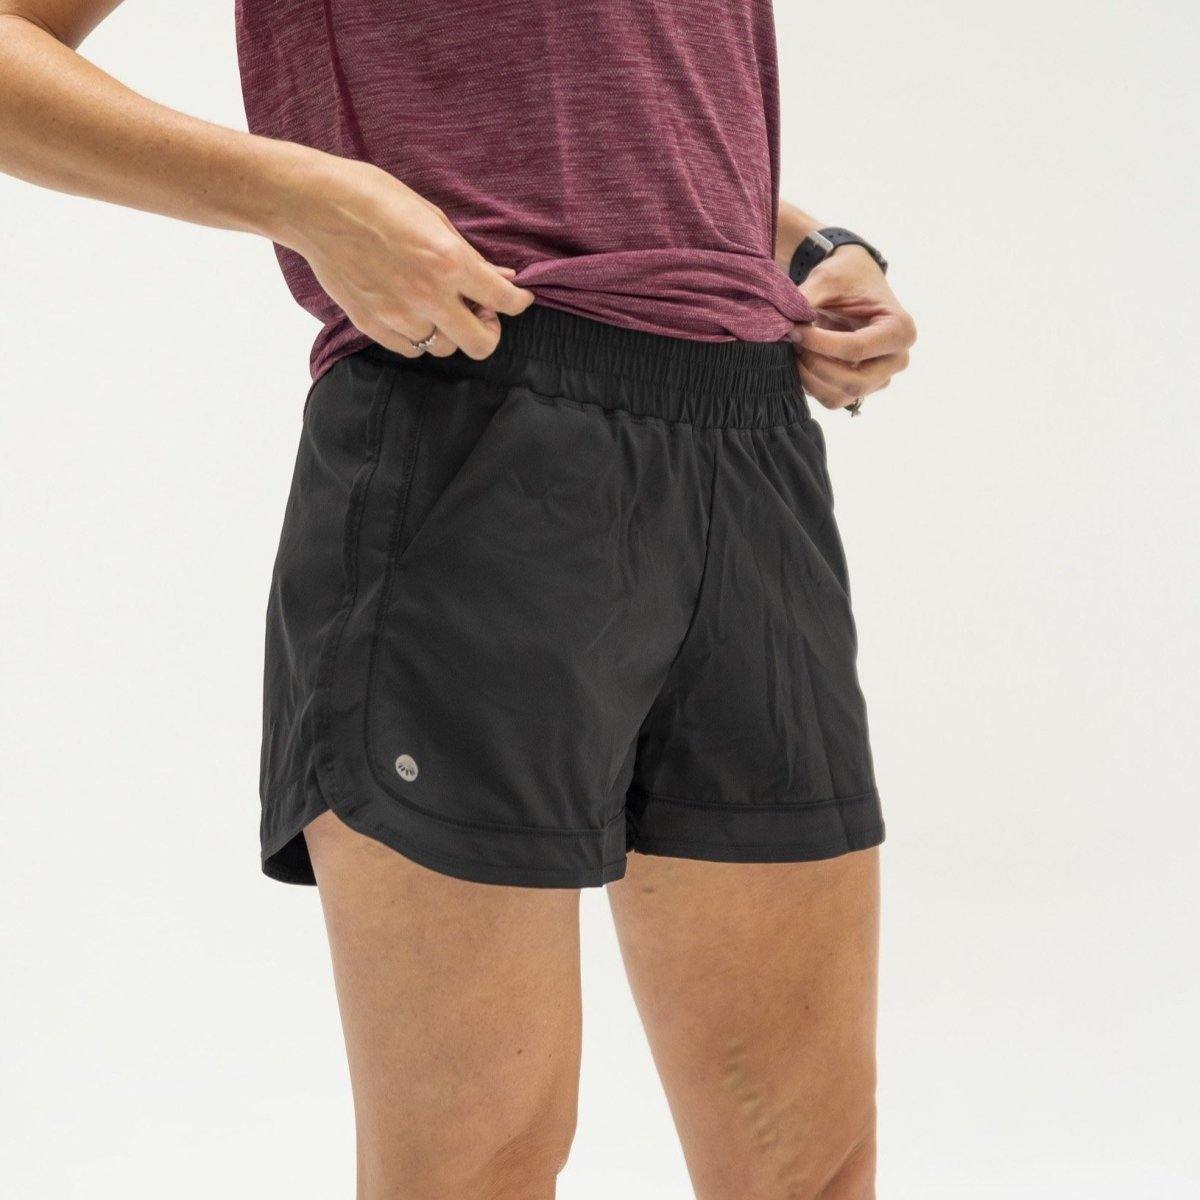 Senita Athletics Solid Black Athletic Shorts Size XL - 47% off